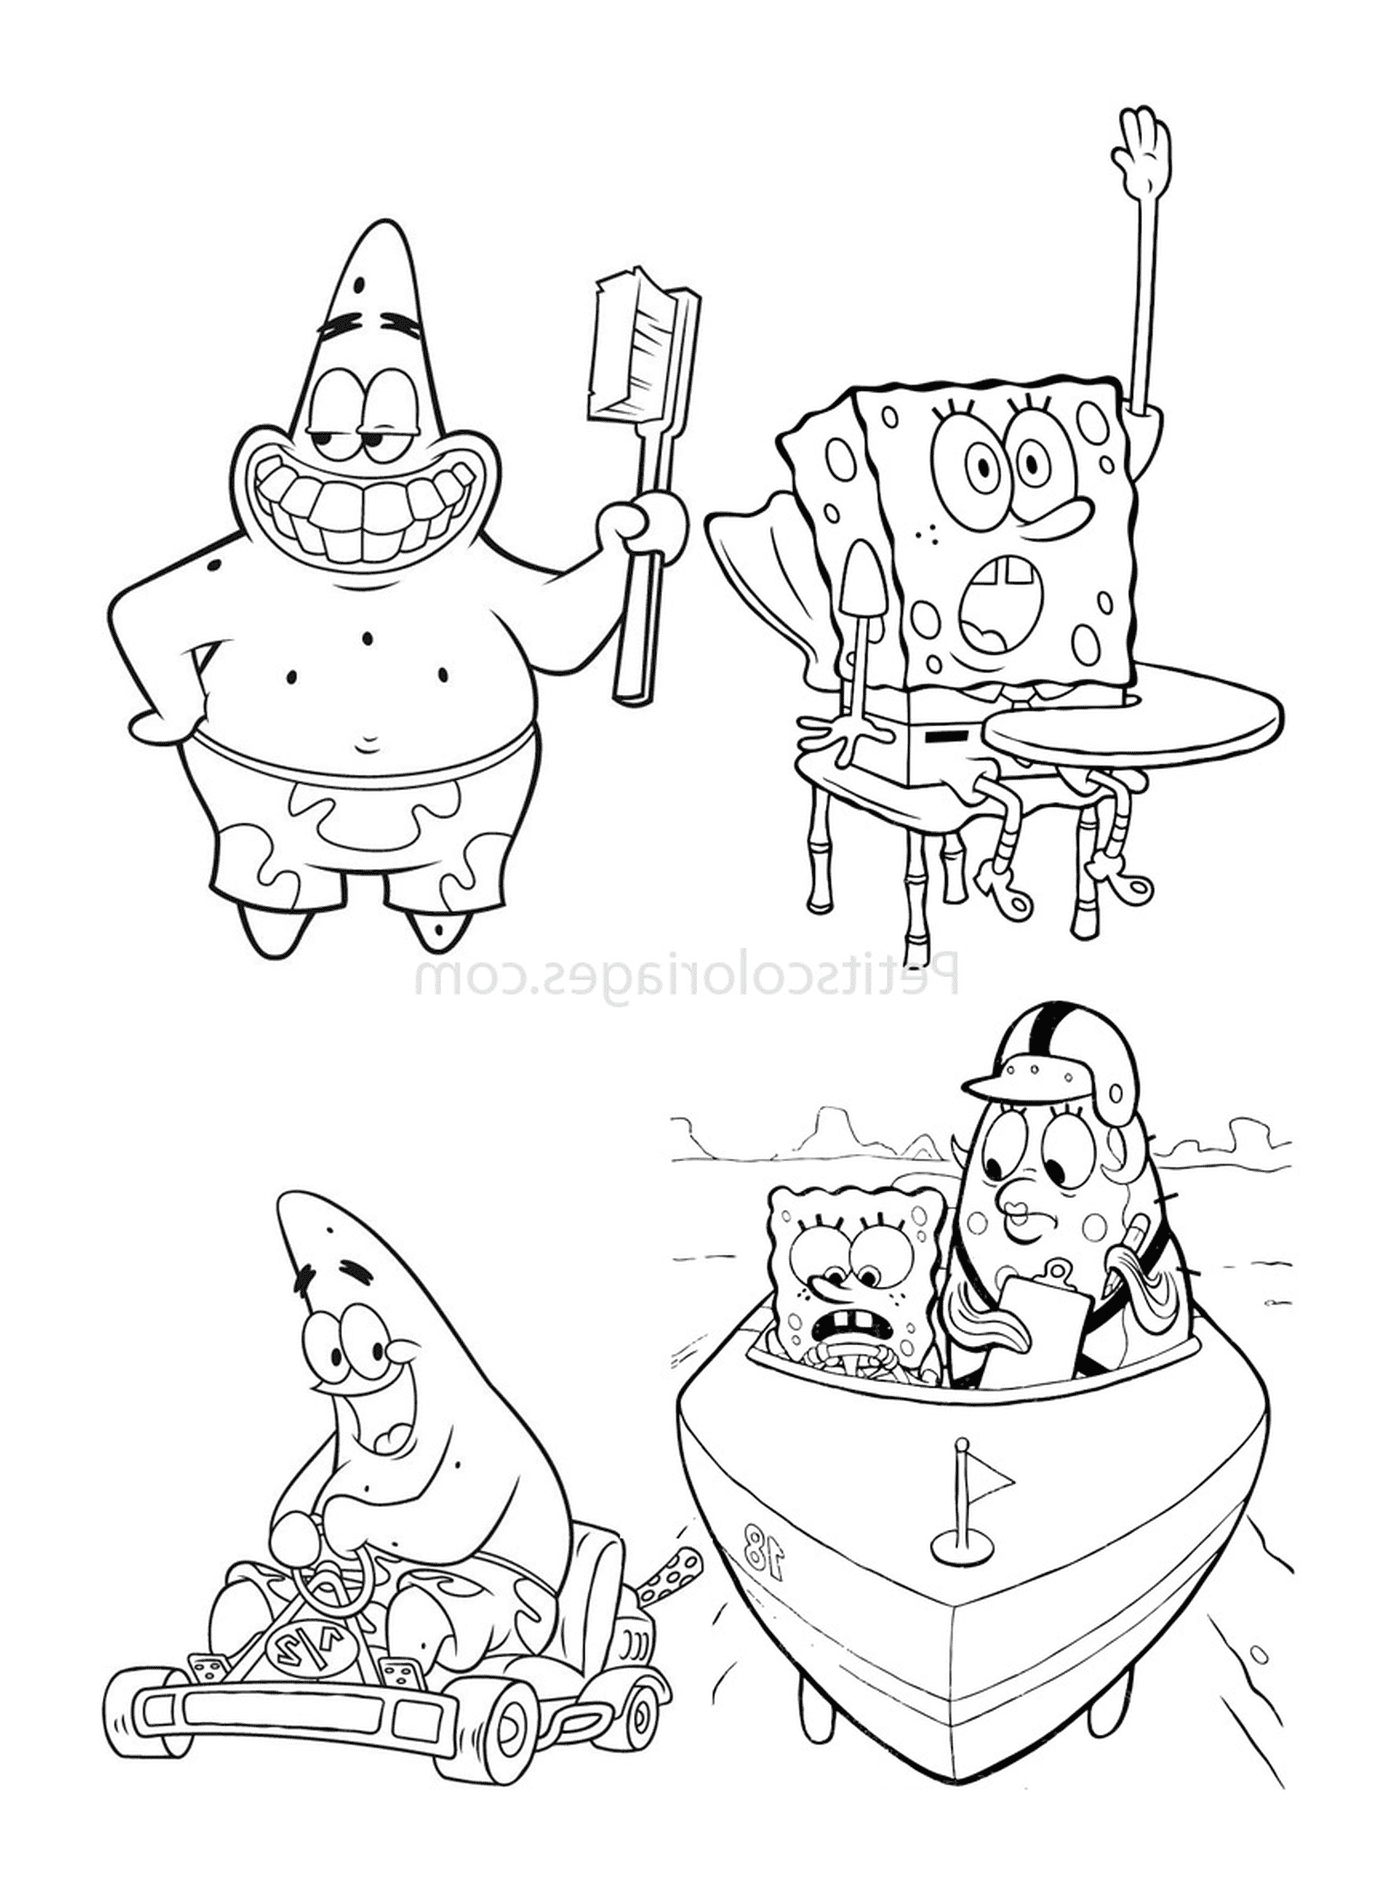  A set of four images of SpongeBob and Patrick 